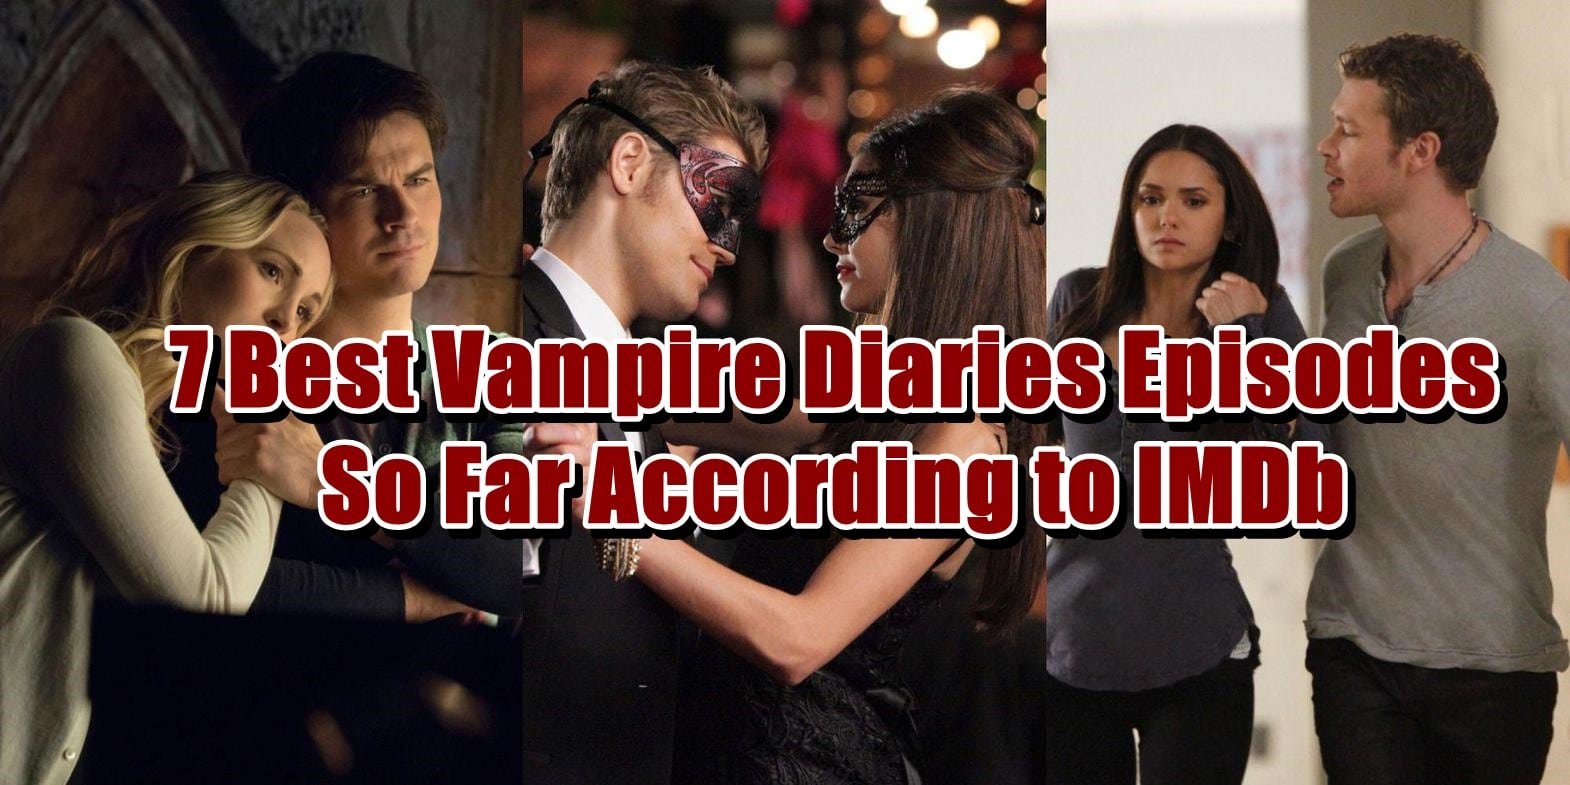 7 Best Vampire Diaries Episodes So Far According to IMDb